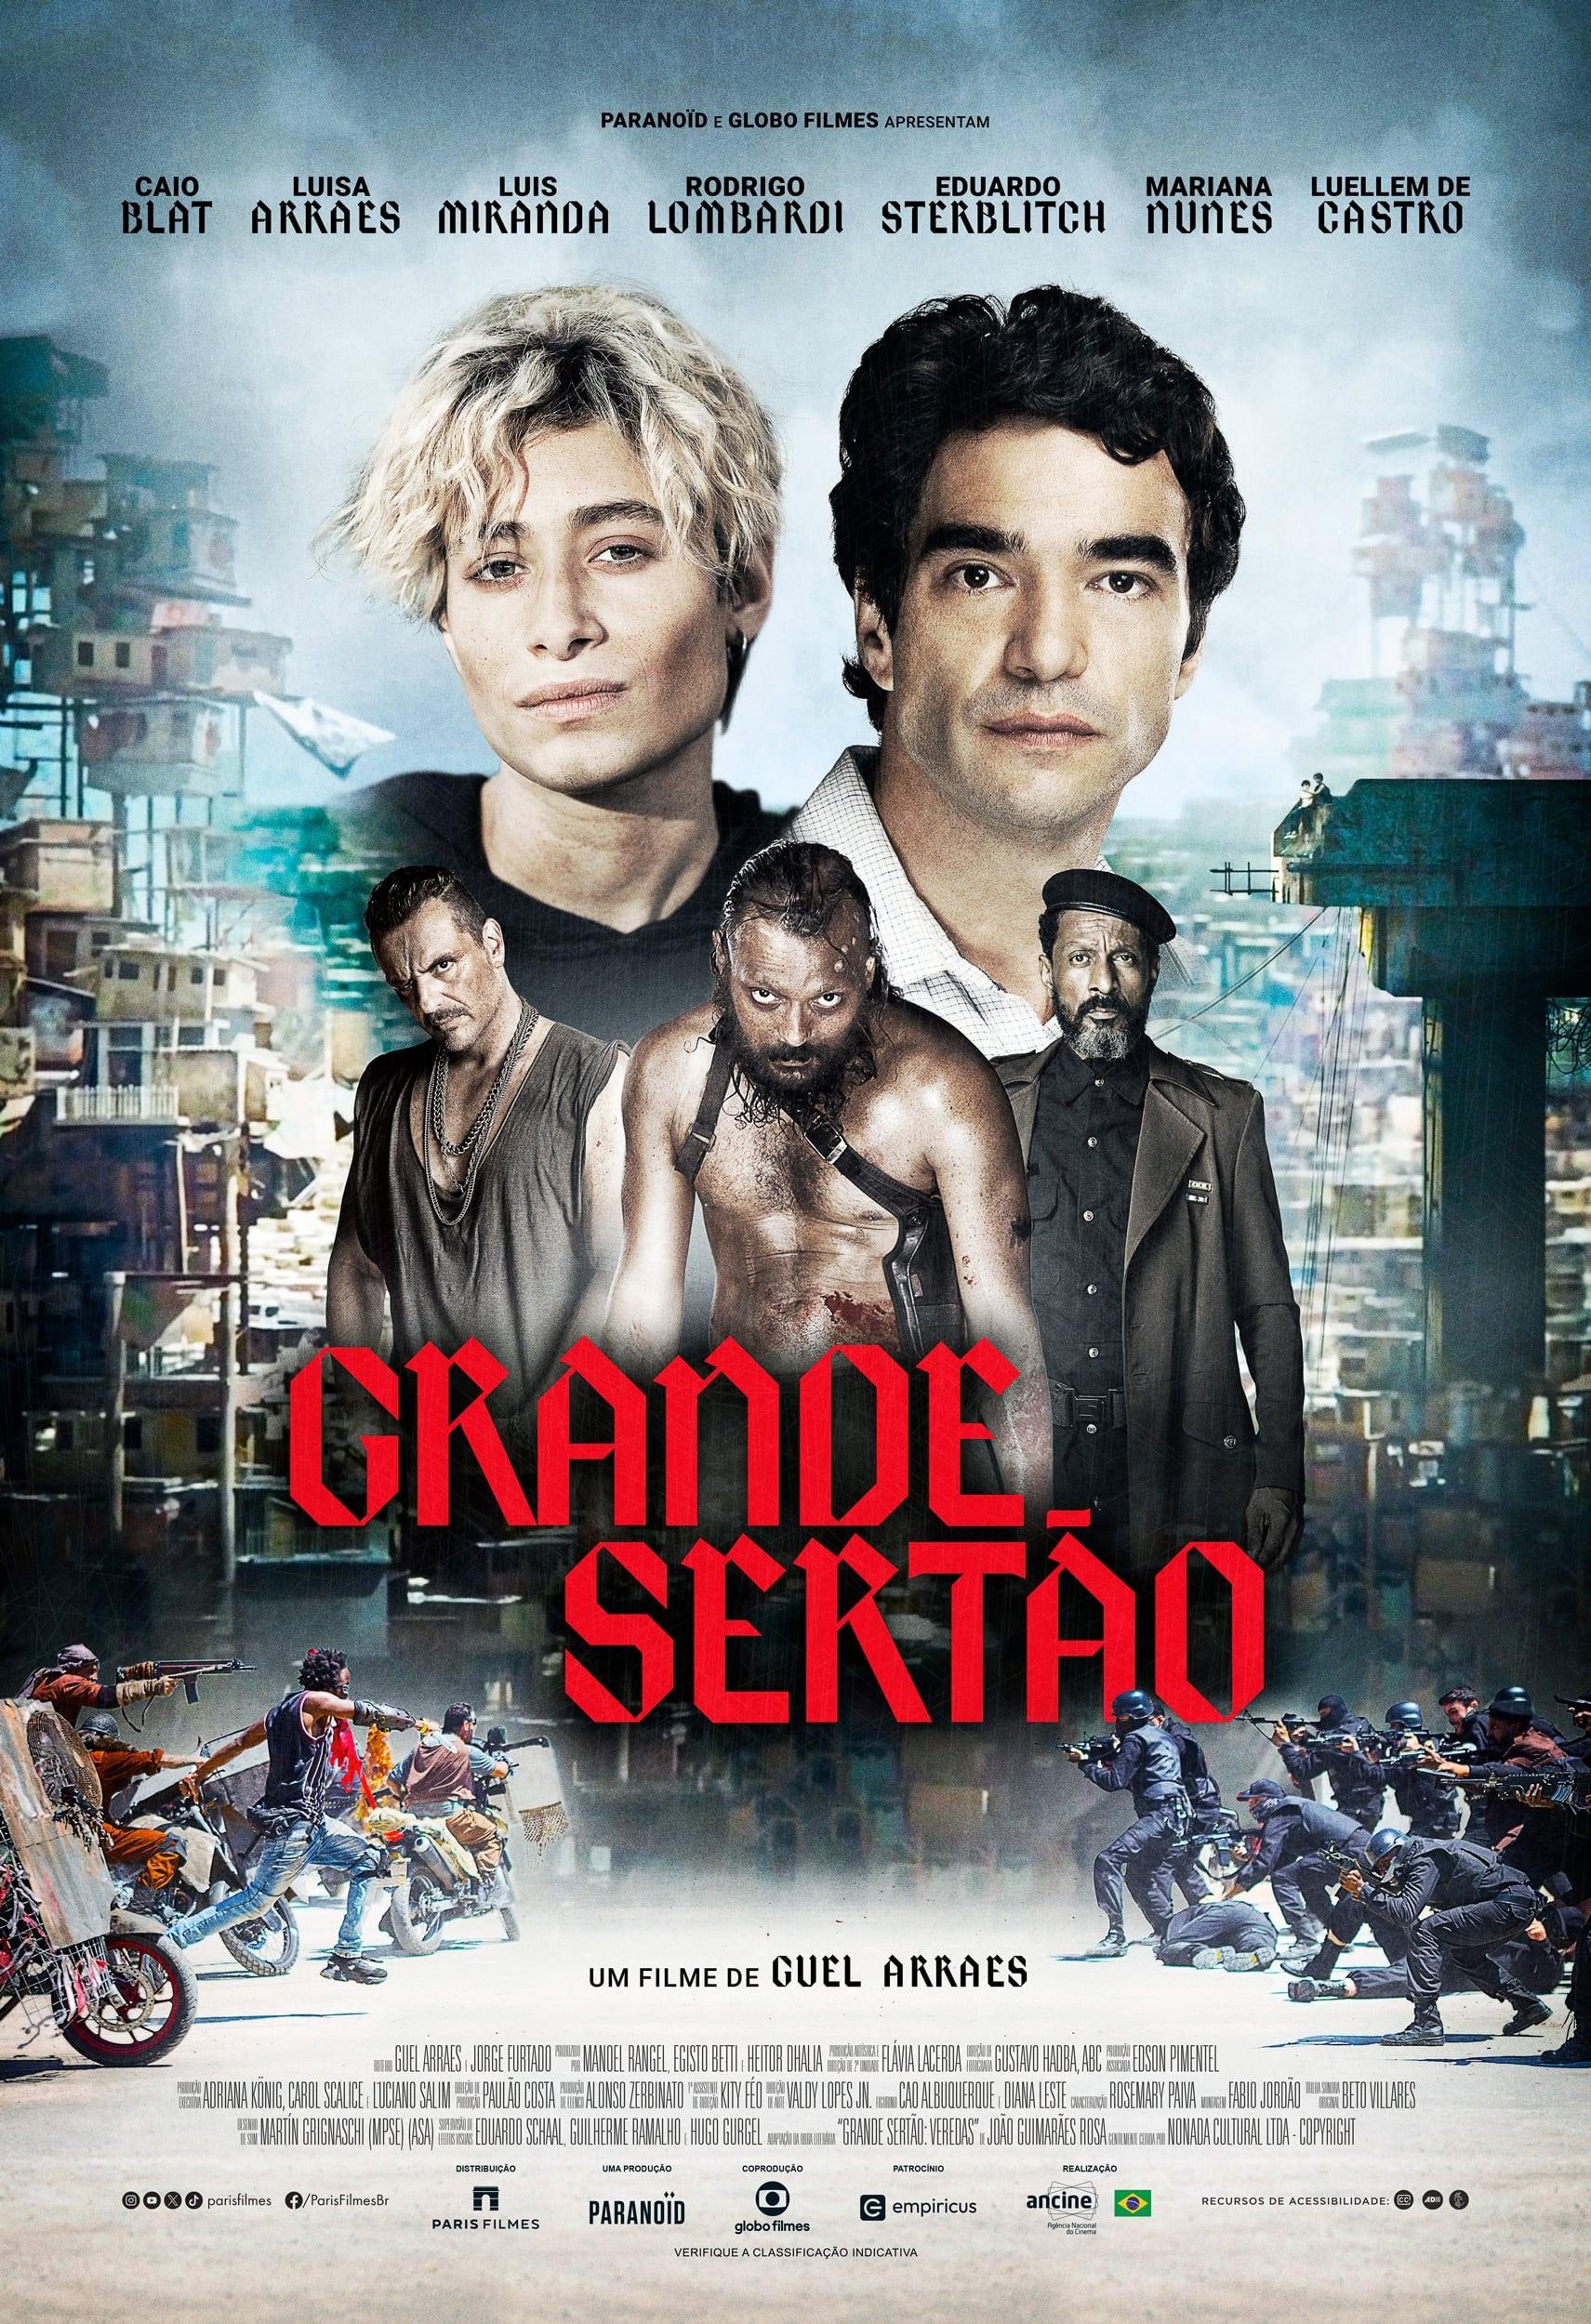 Great Sertão poster